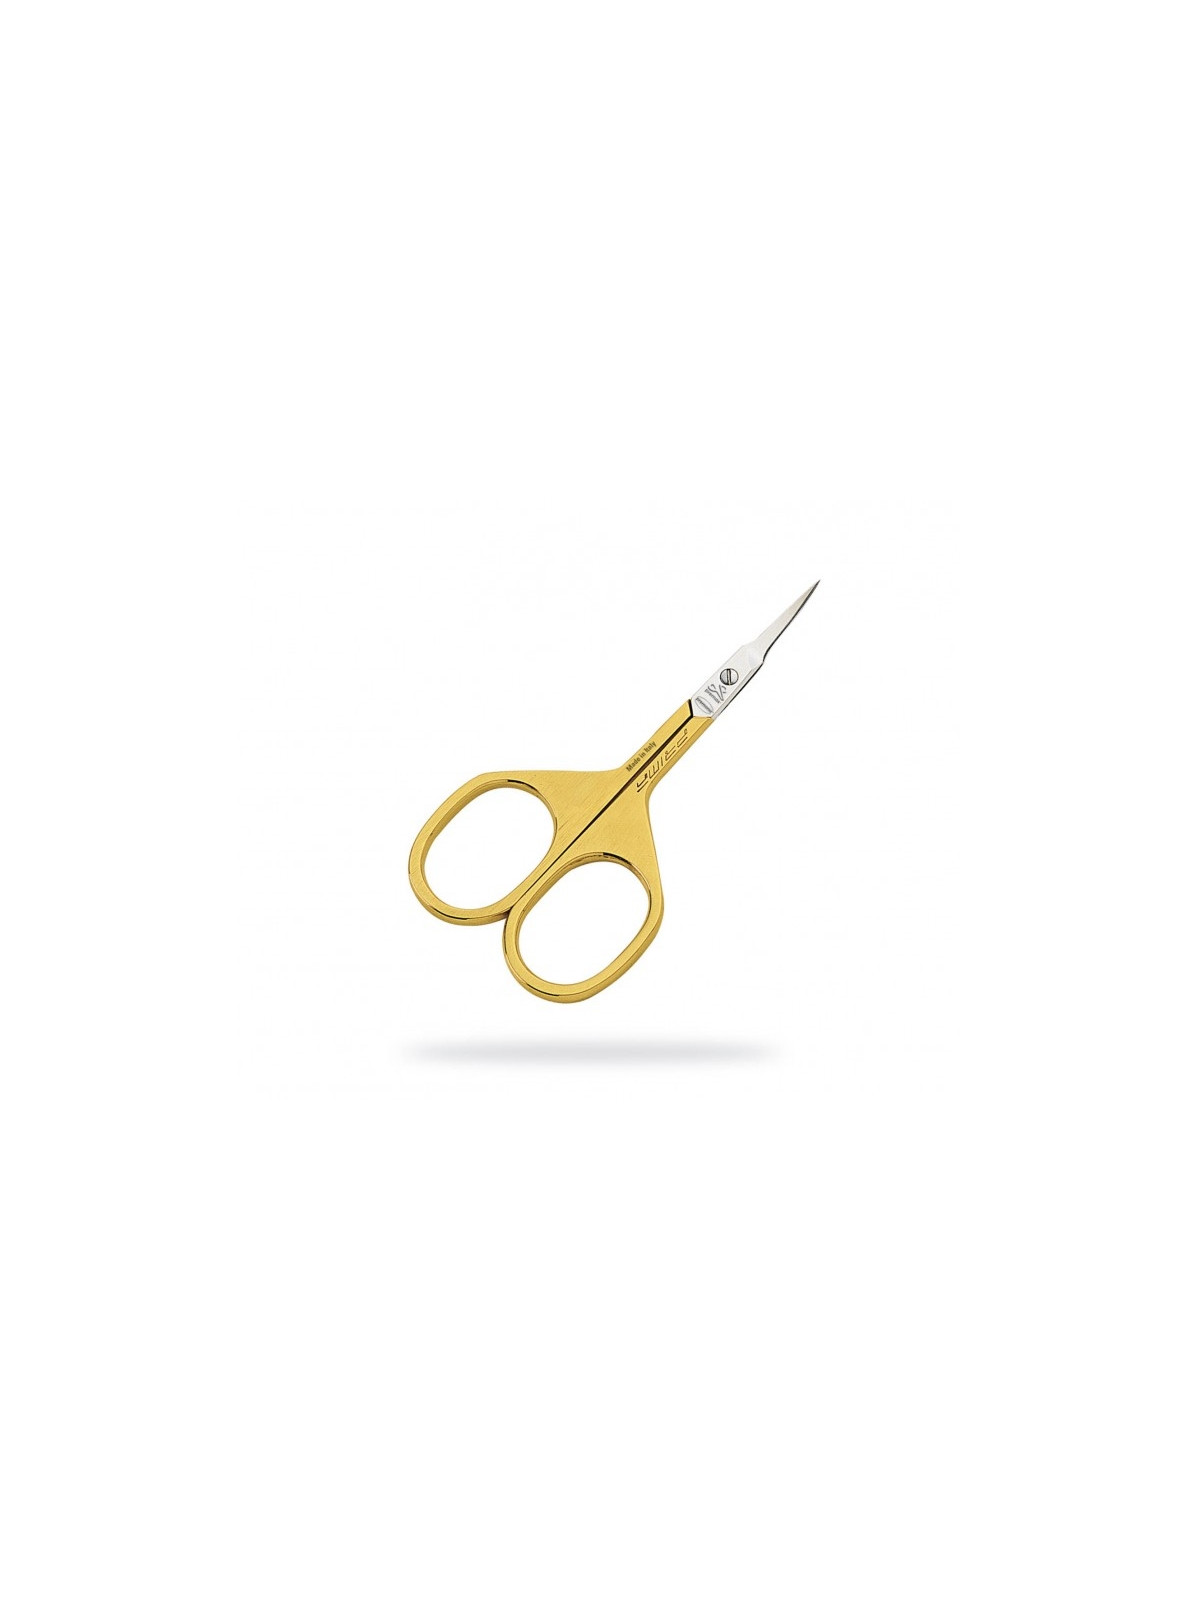 Premax Optima Gold Cuticle Scissors with Narrow Blades